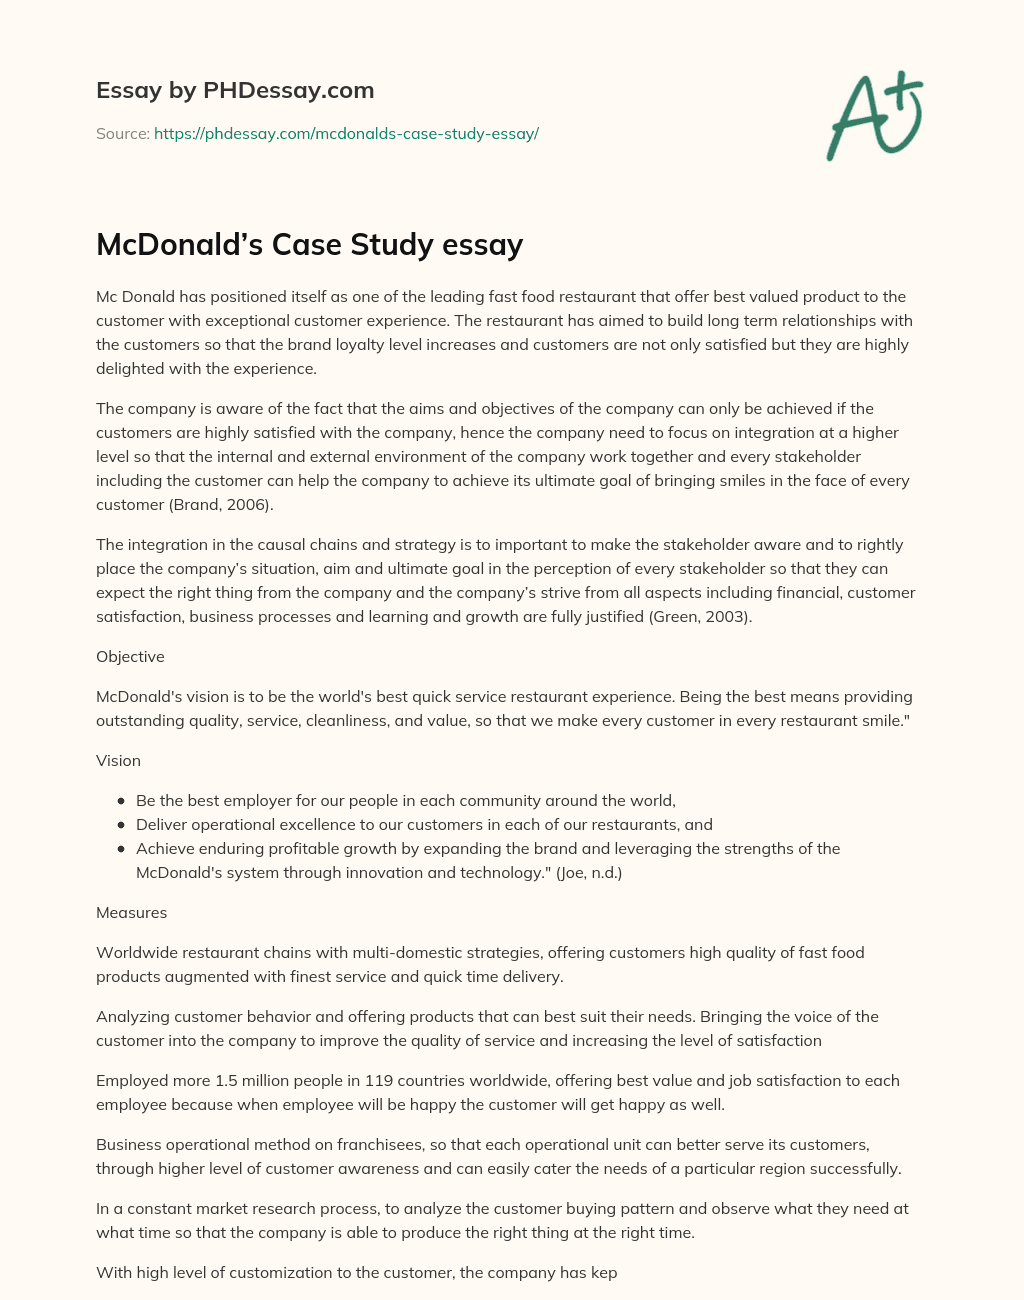 mcdonald's case study problem statement